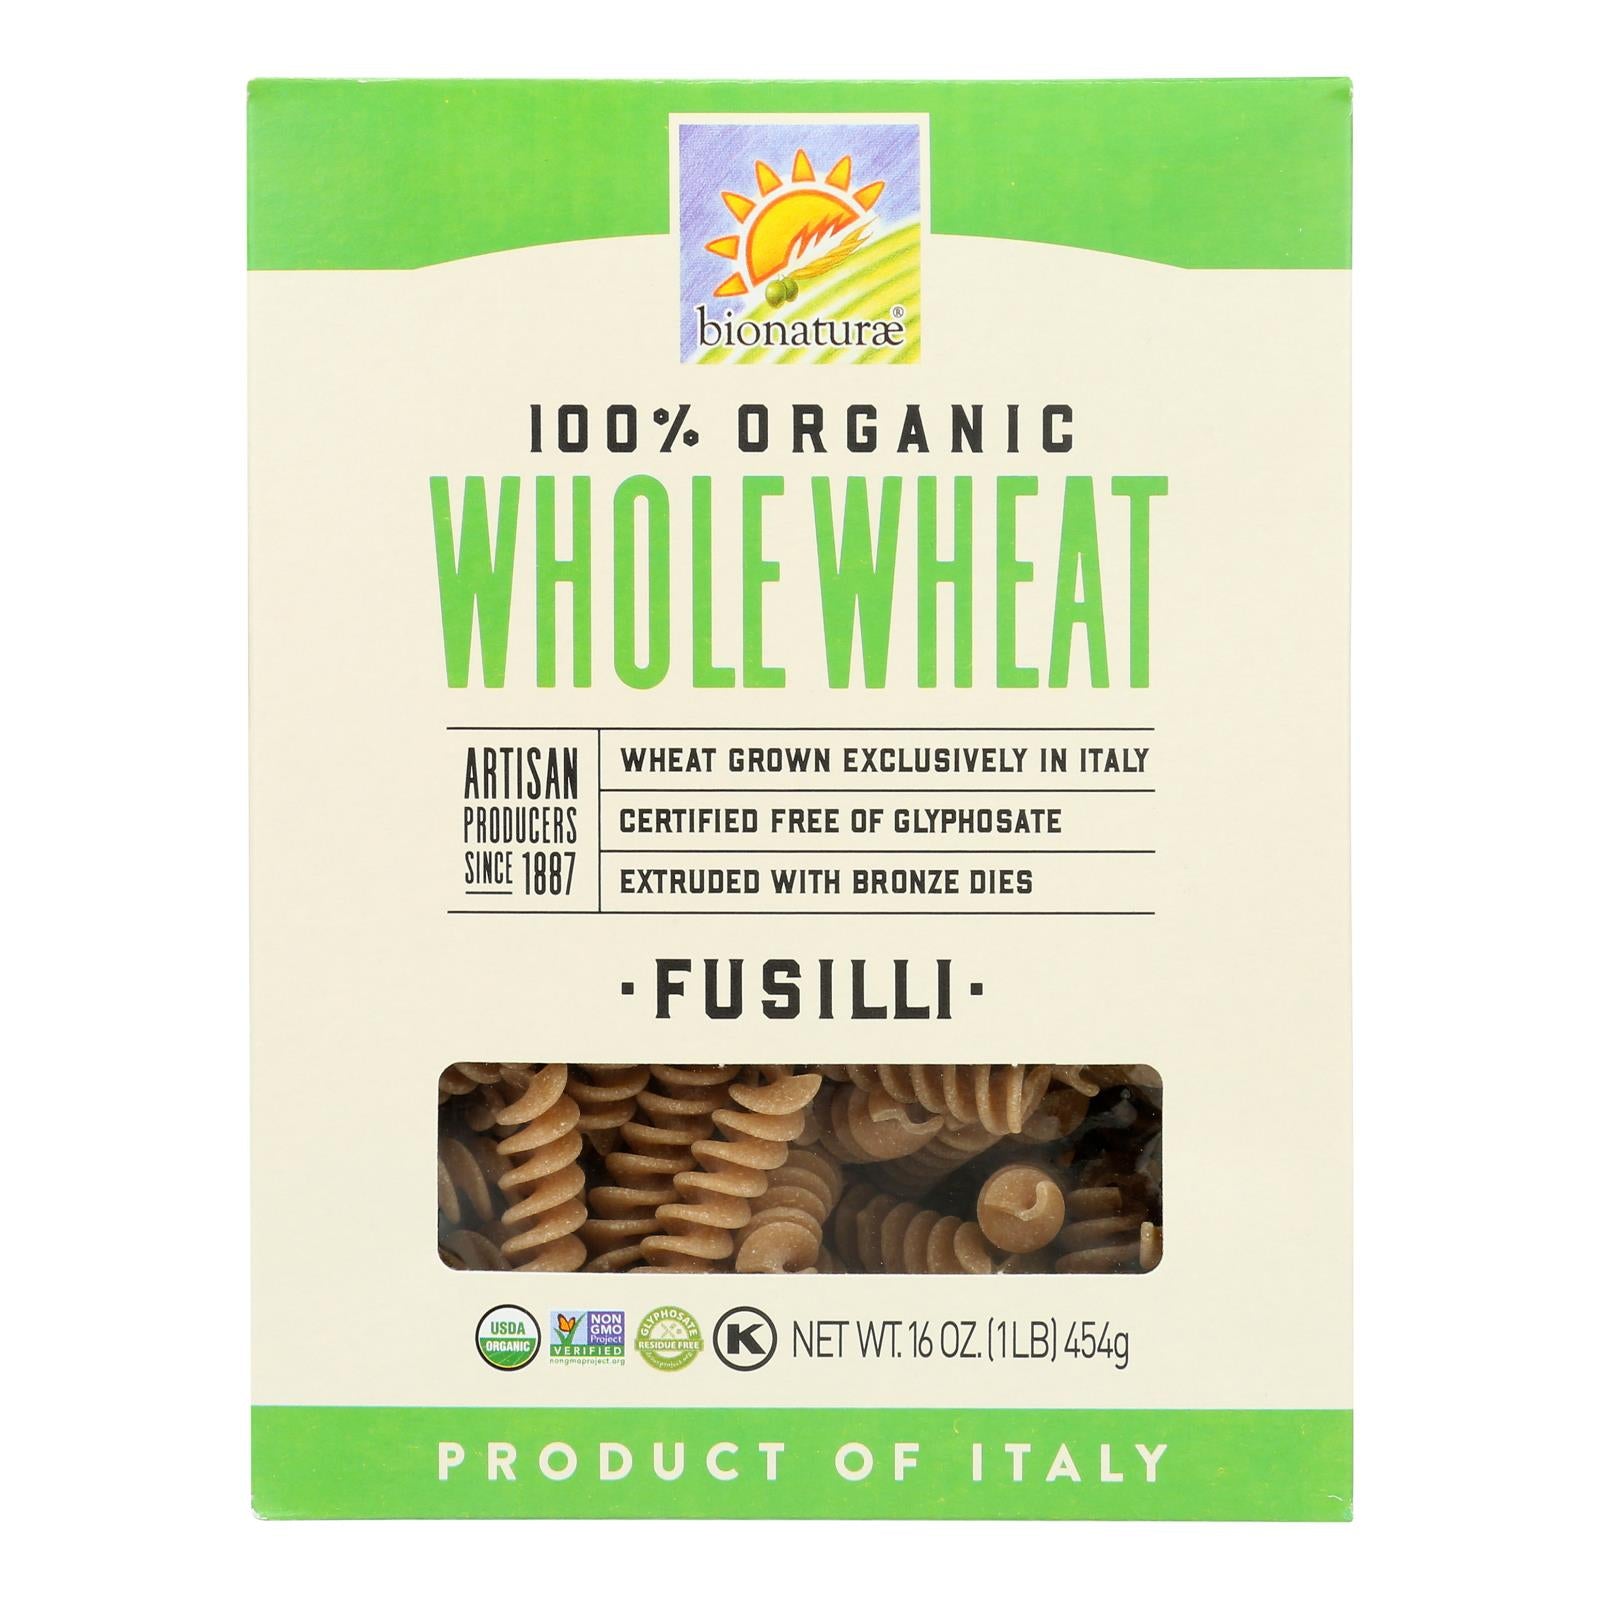 Bionaturae Pasta - Organic - 100 Percent Whole Wheat - Fusilli - 16 Oz - Case Of 12